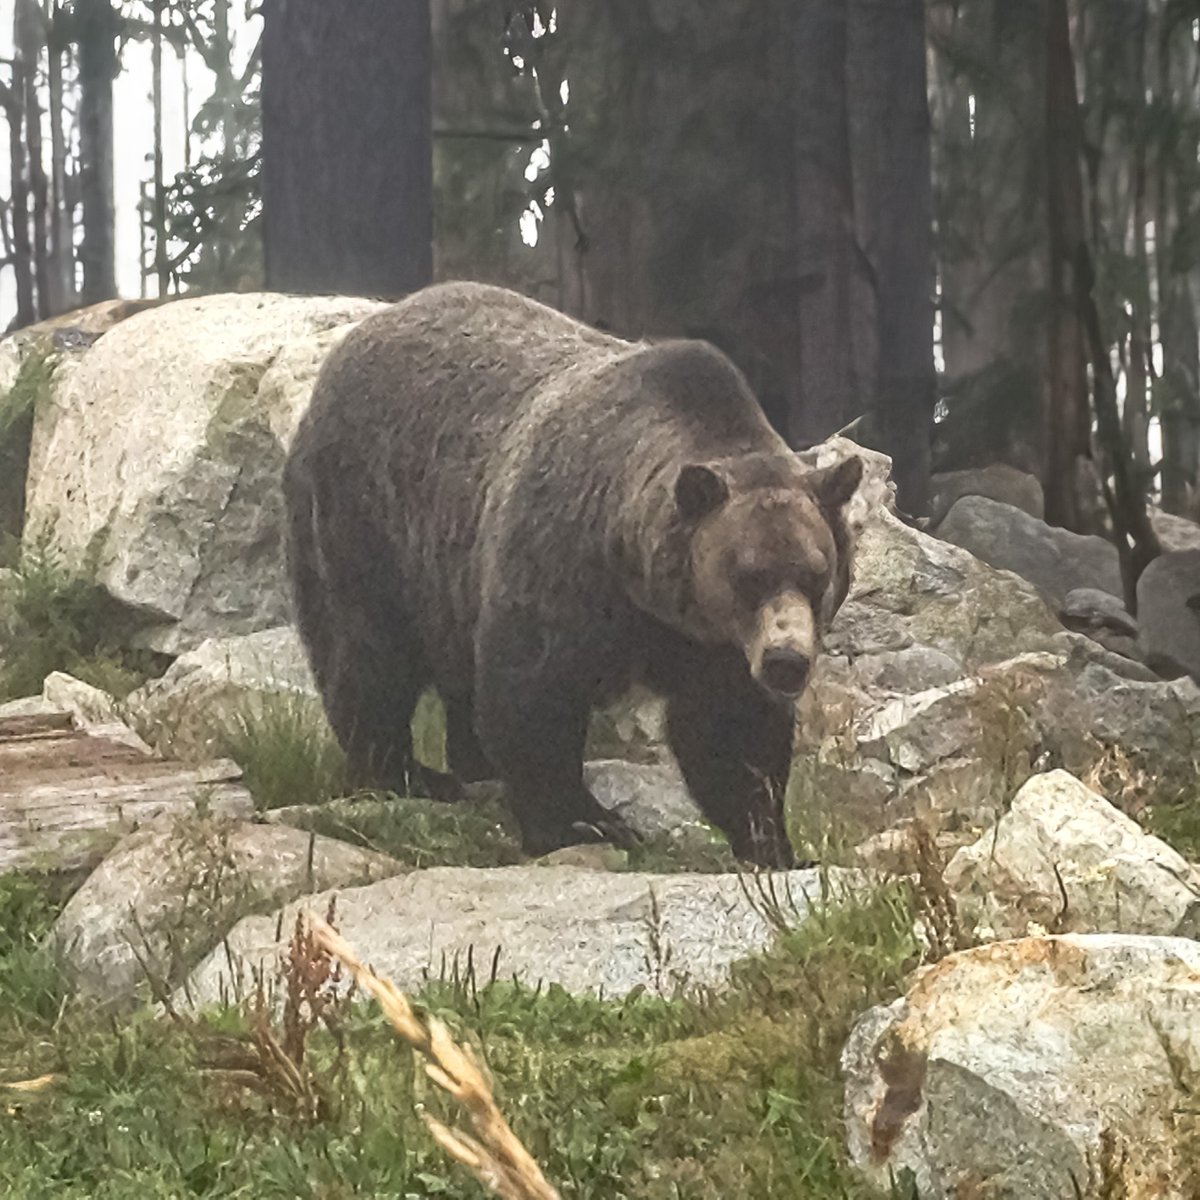 Time to wake up. 🐻
#WildlifeWednesday #NaturePhotography #grizzlybear #exploreBC #helloBC